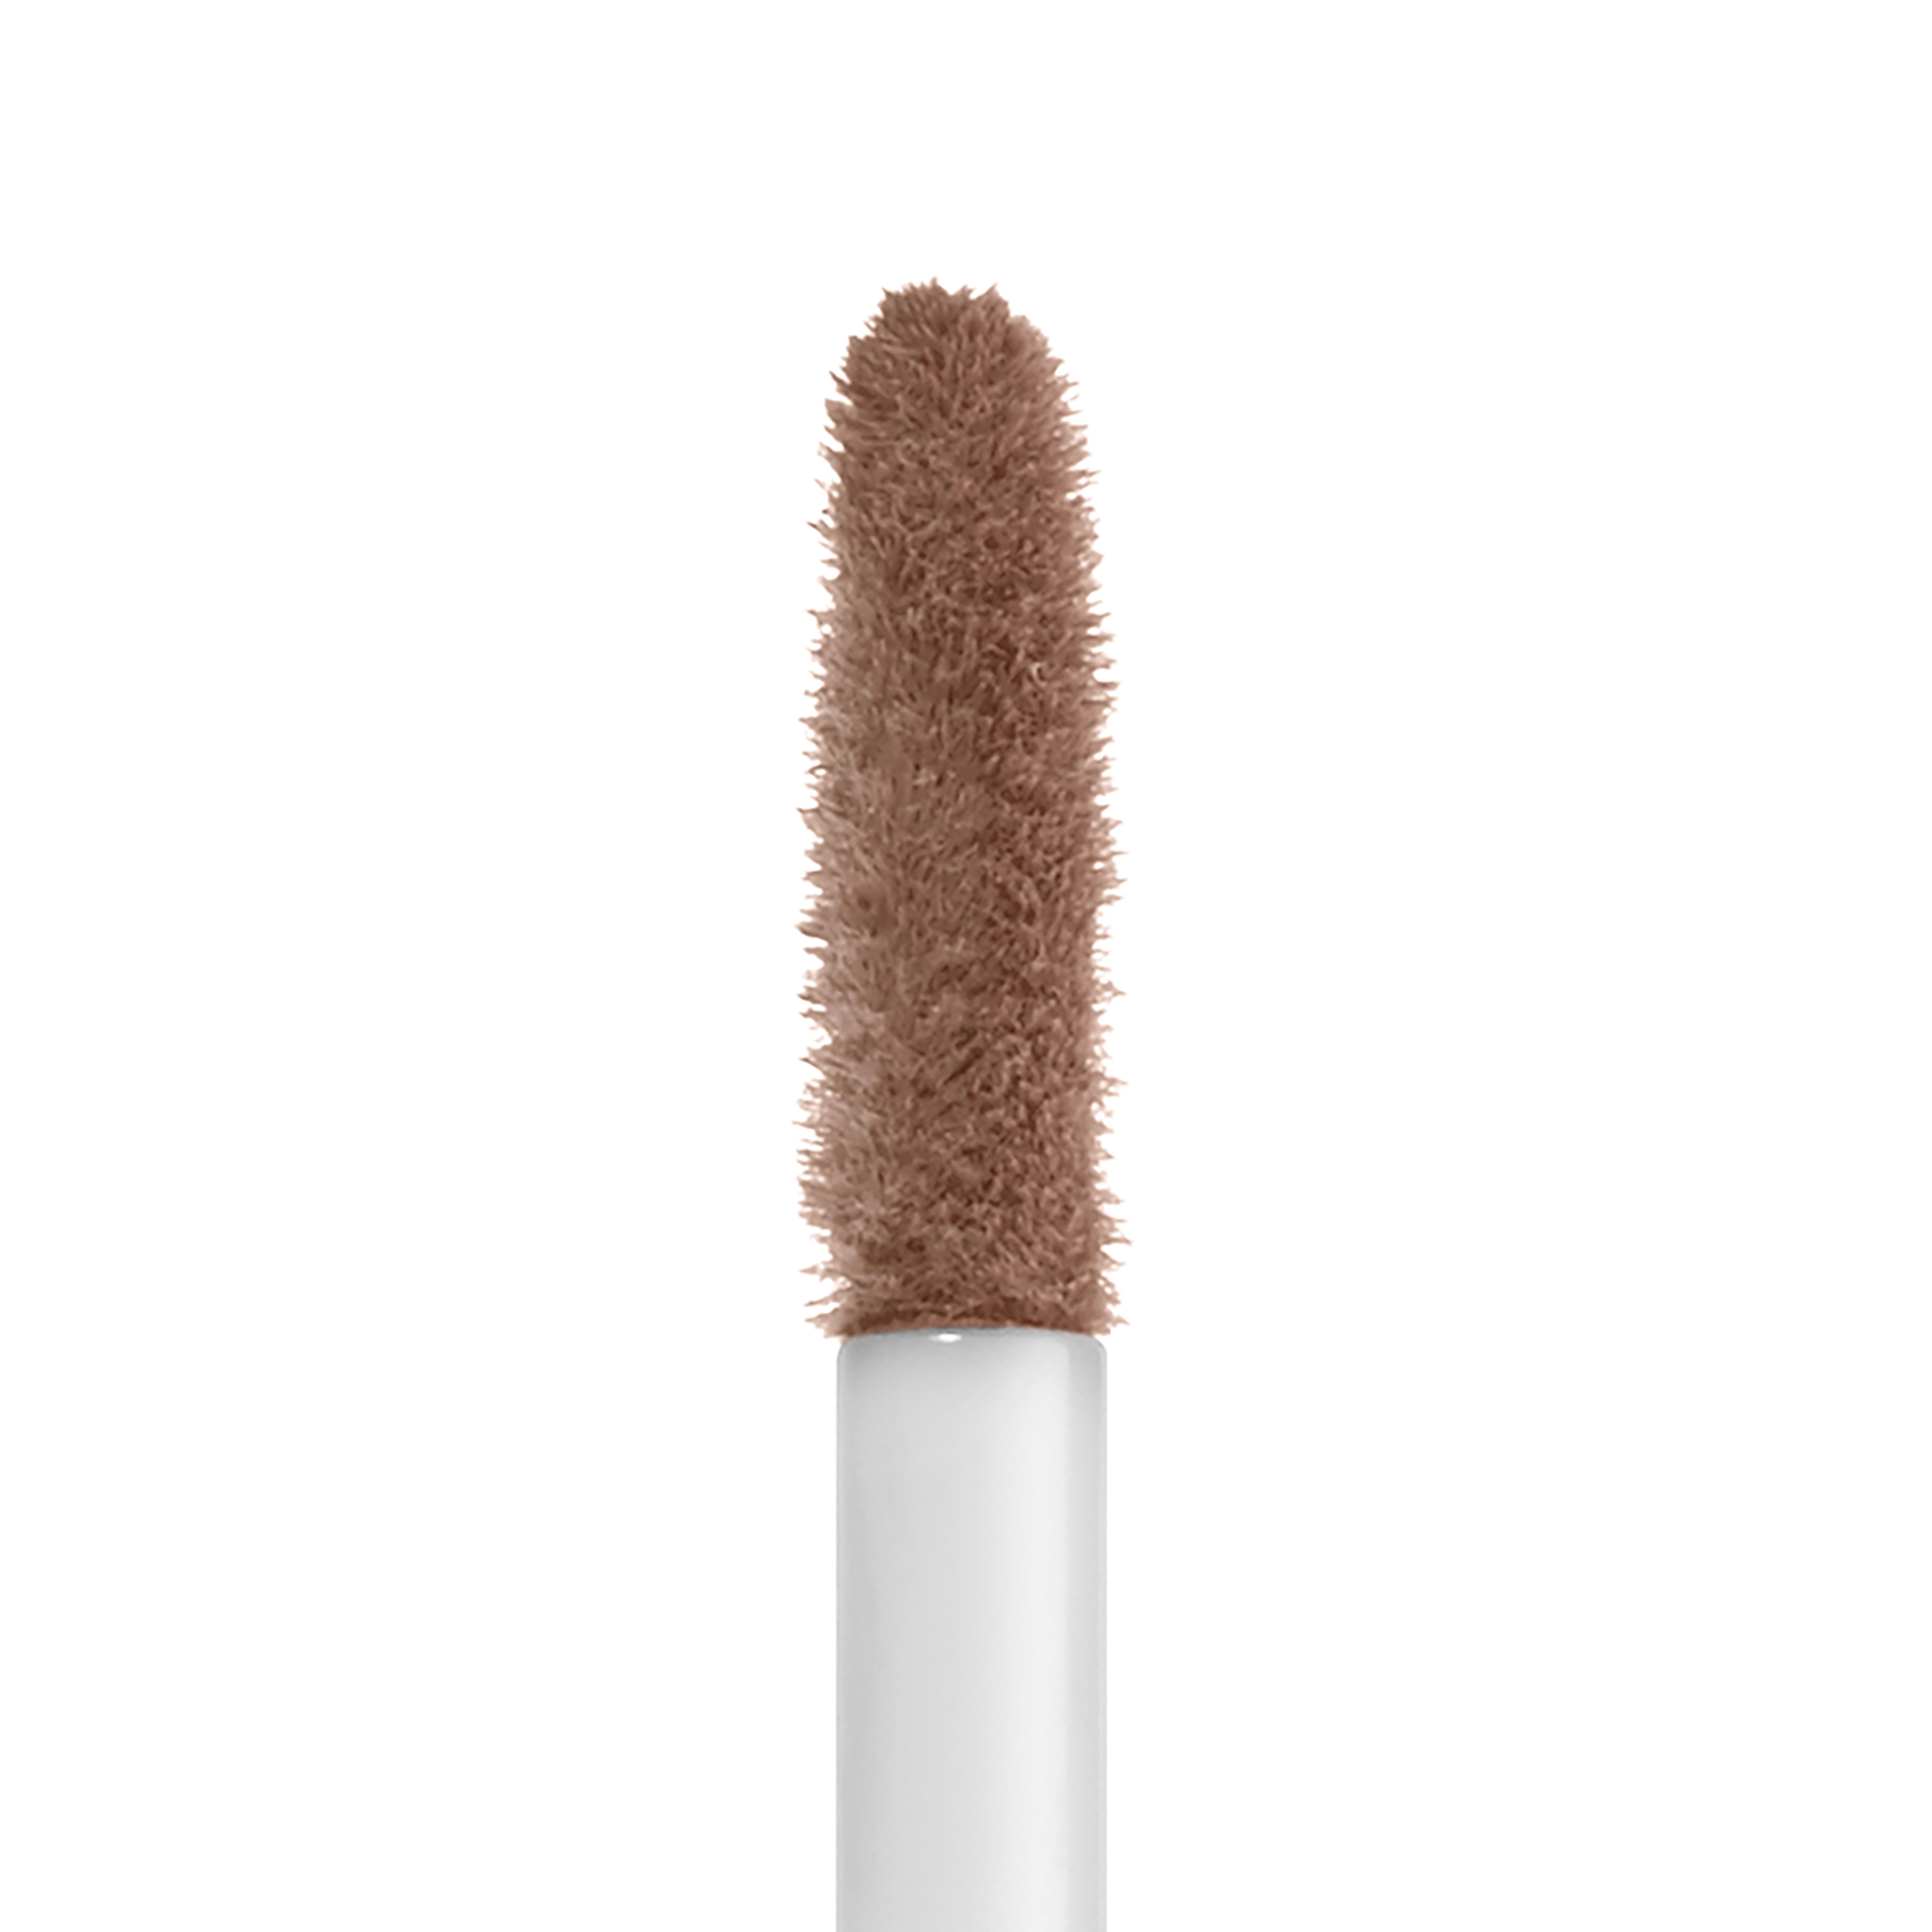 NYX Professional Makeup Lip Lingerie, Long-Lasting Matte Liquid Lipstick with Vitamin E, Push-Up, 0.16 Oz - image 6 of 8